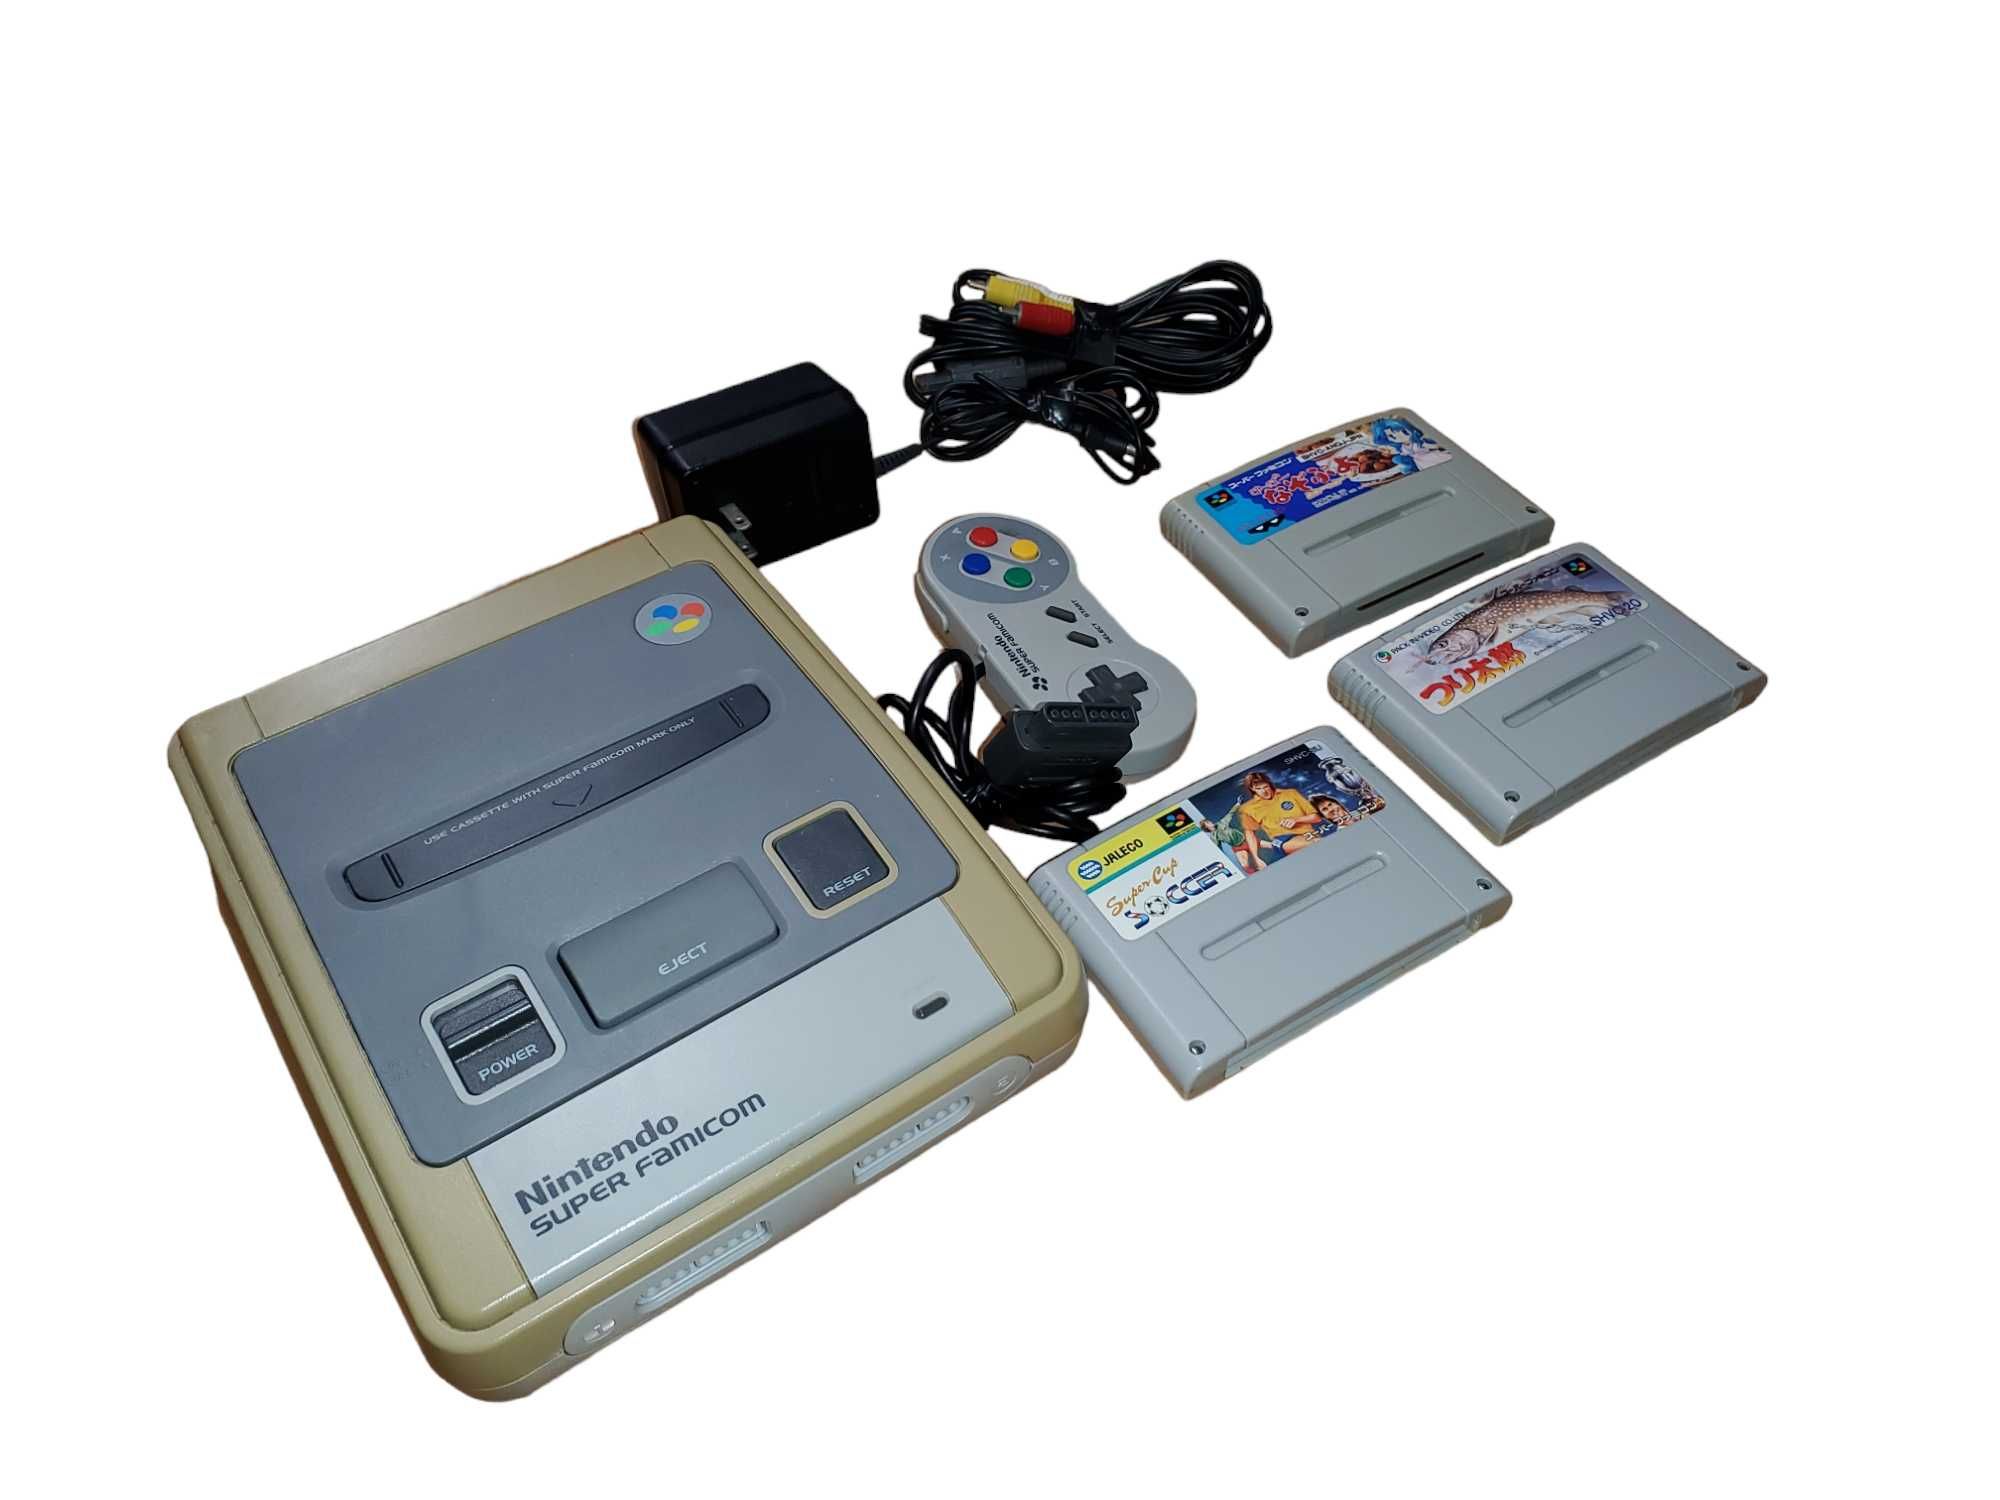 Konsola Nintendo Super Famicom + Gry